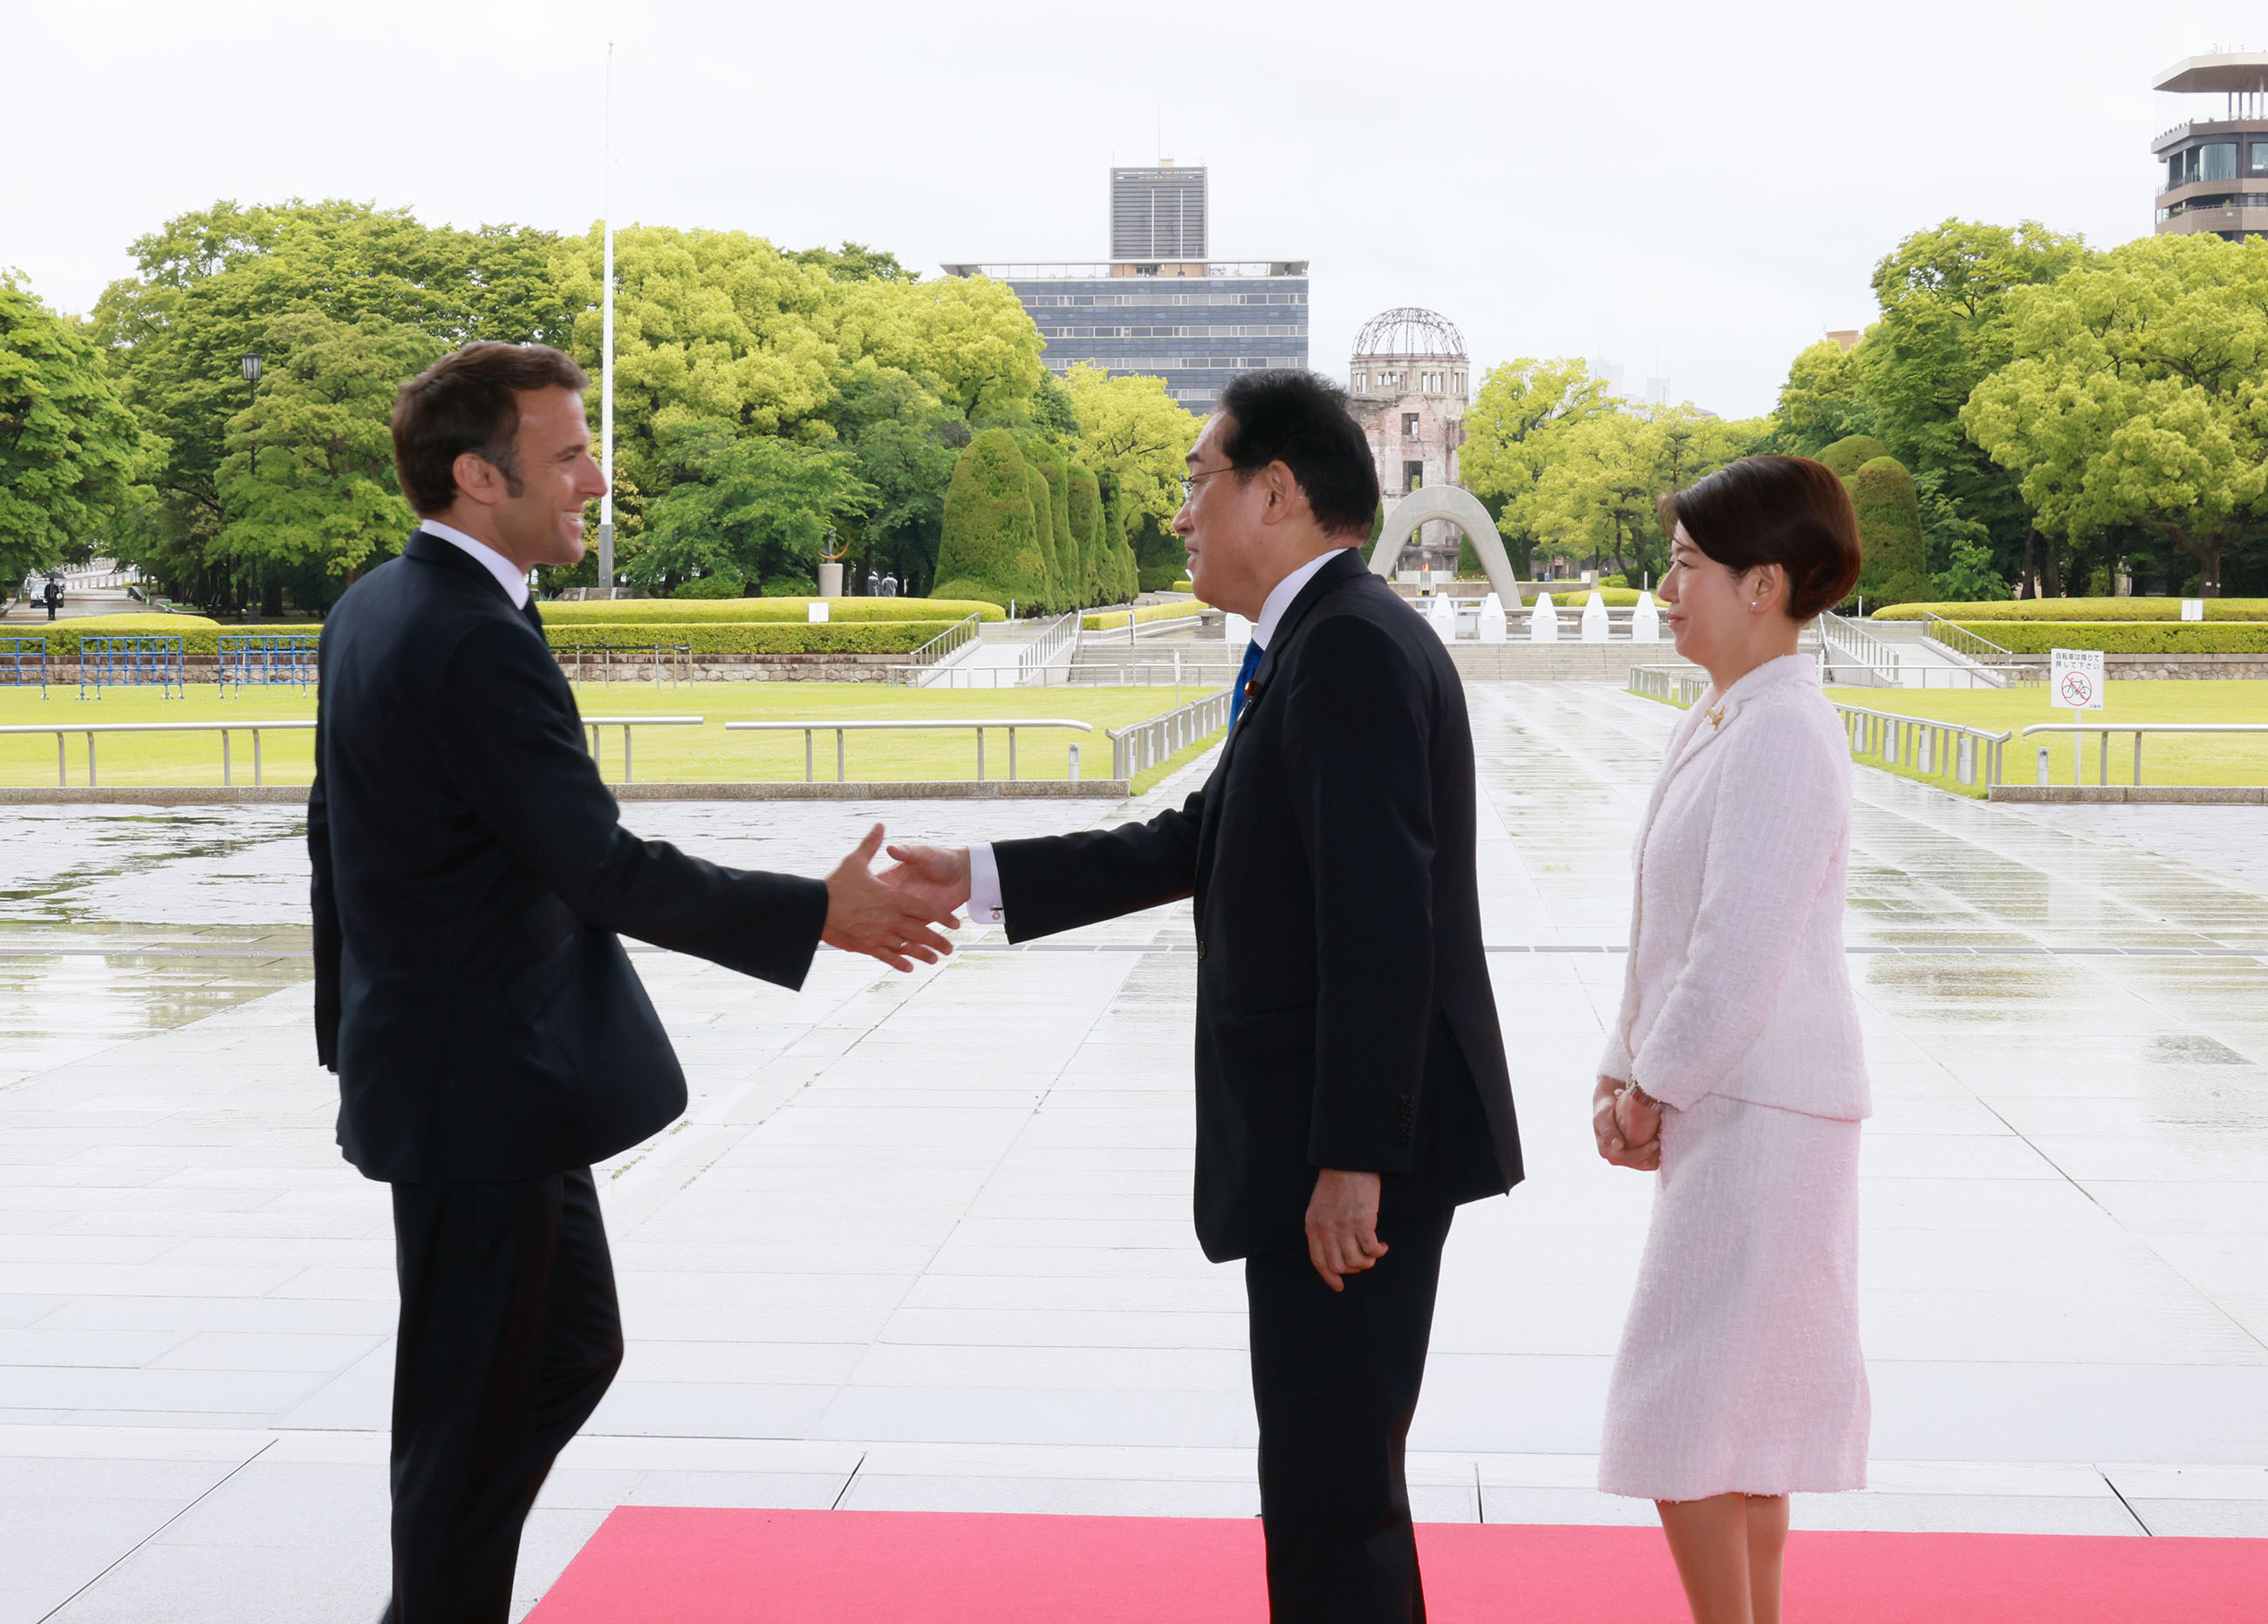 Prime Minister Kishida greeting the French President Emmanuel Macron